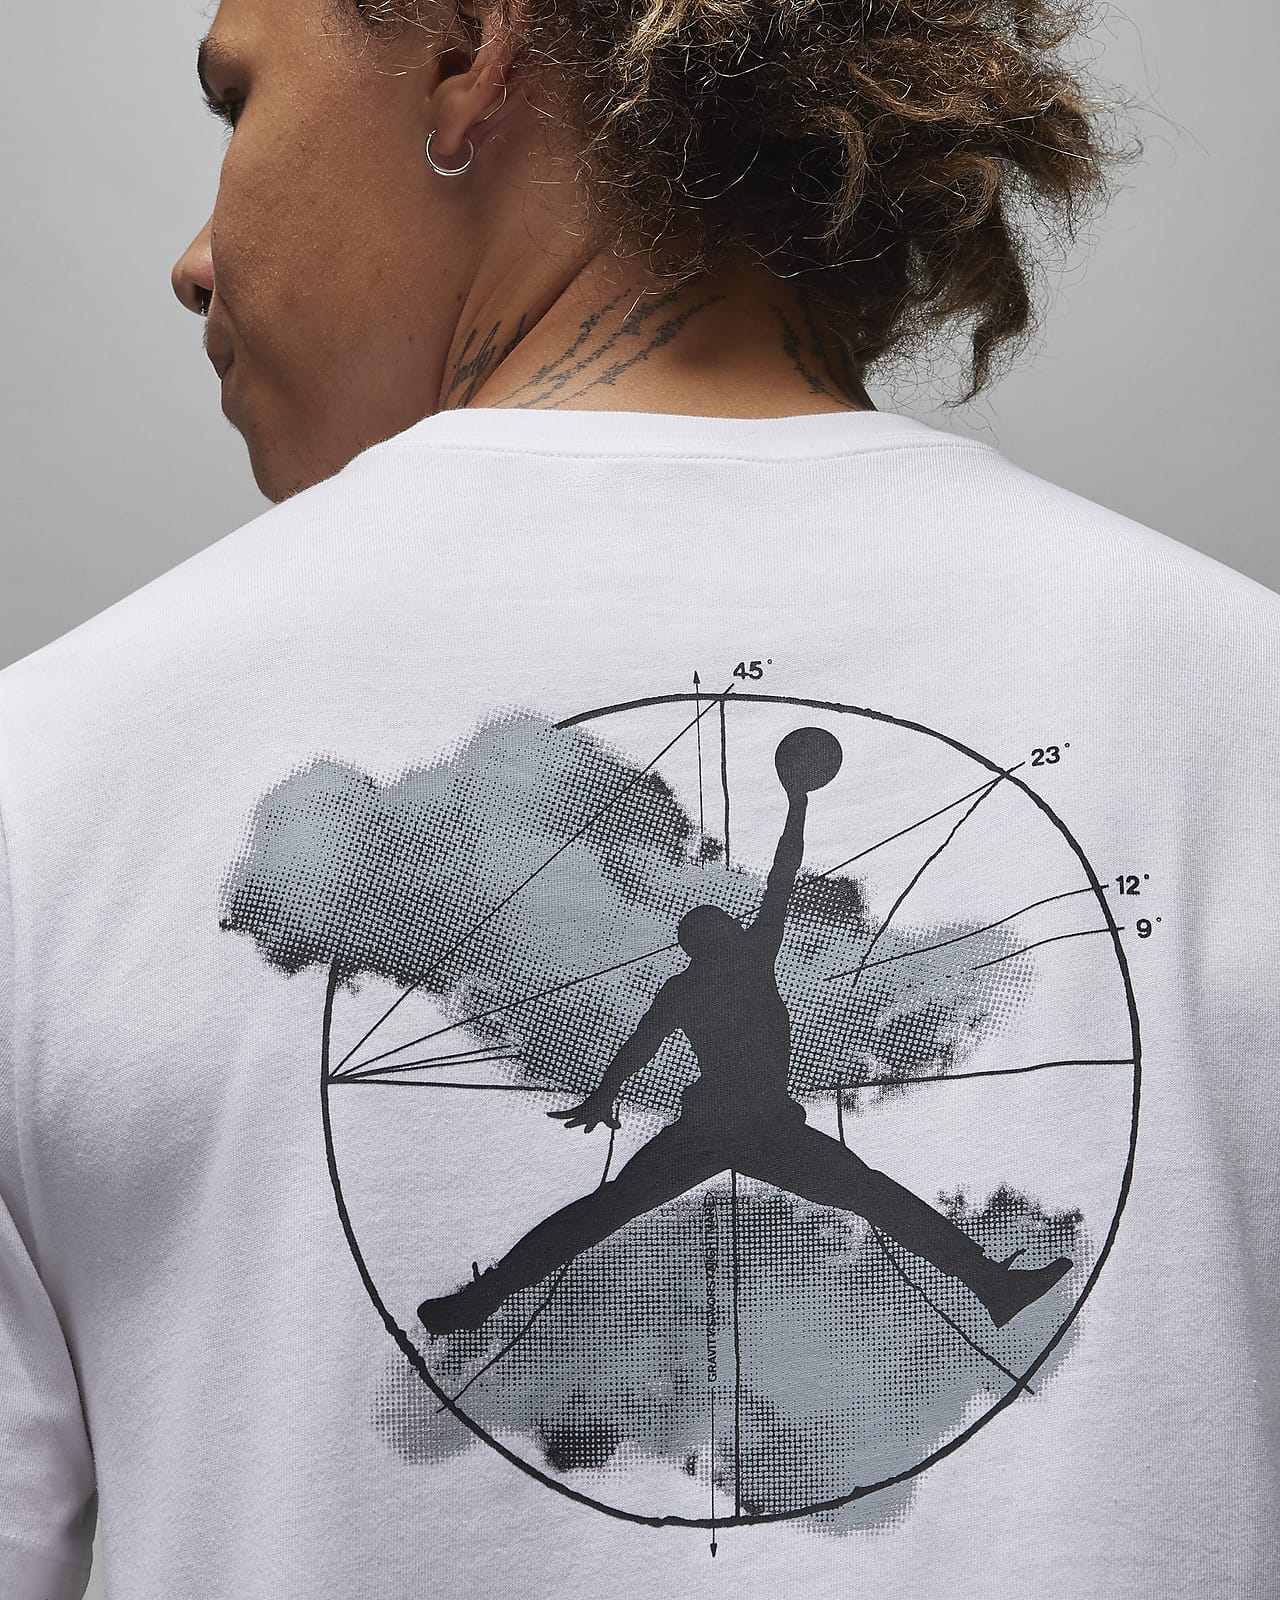 Jordan Sport Men's Graphic T-Shirt. Nike SG